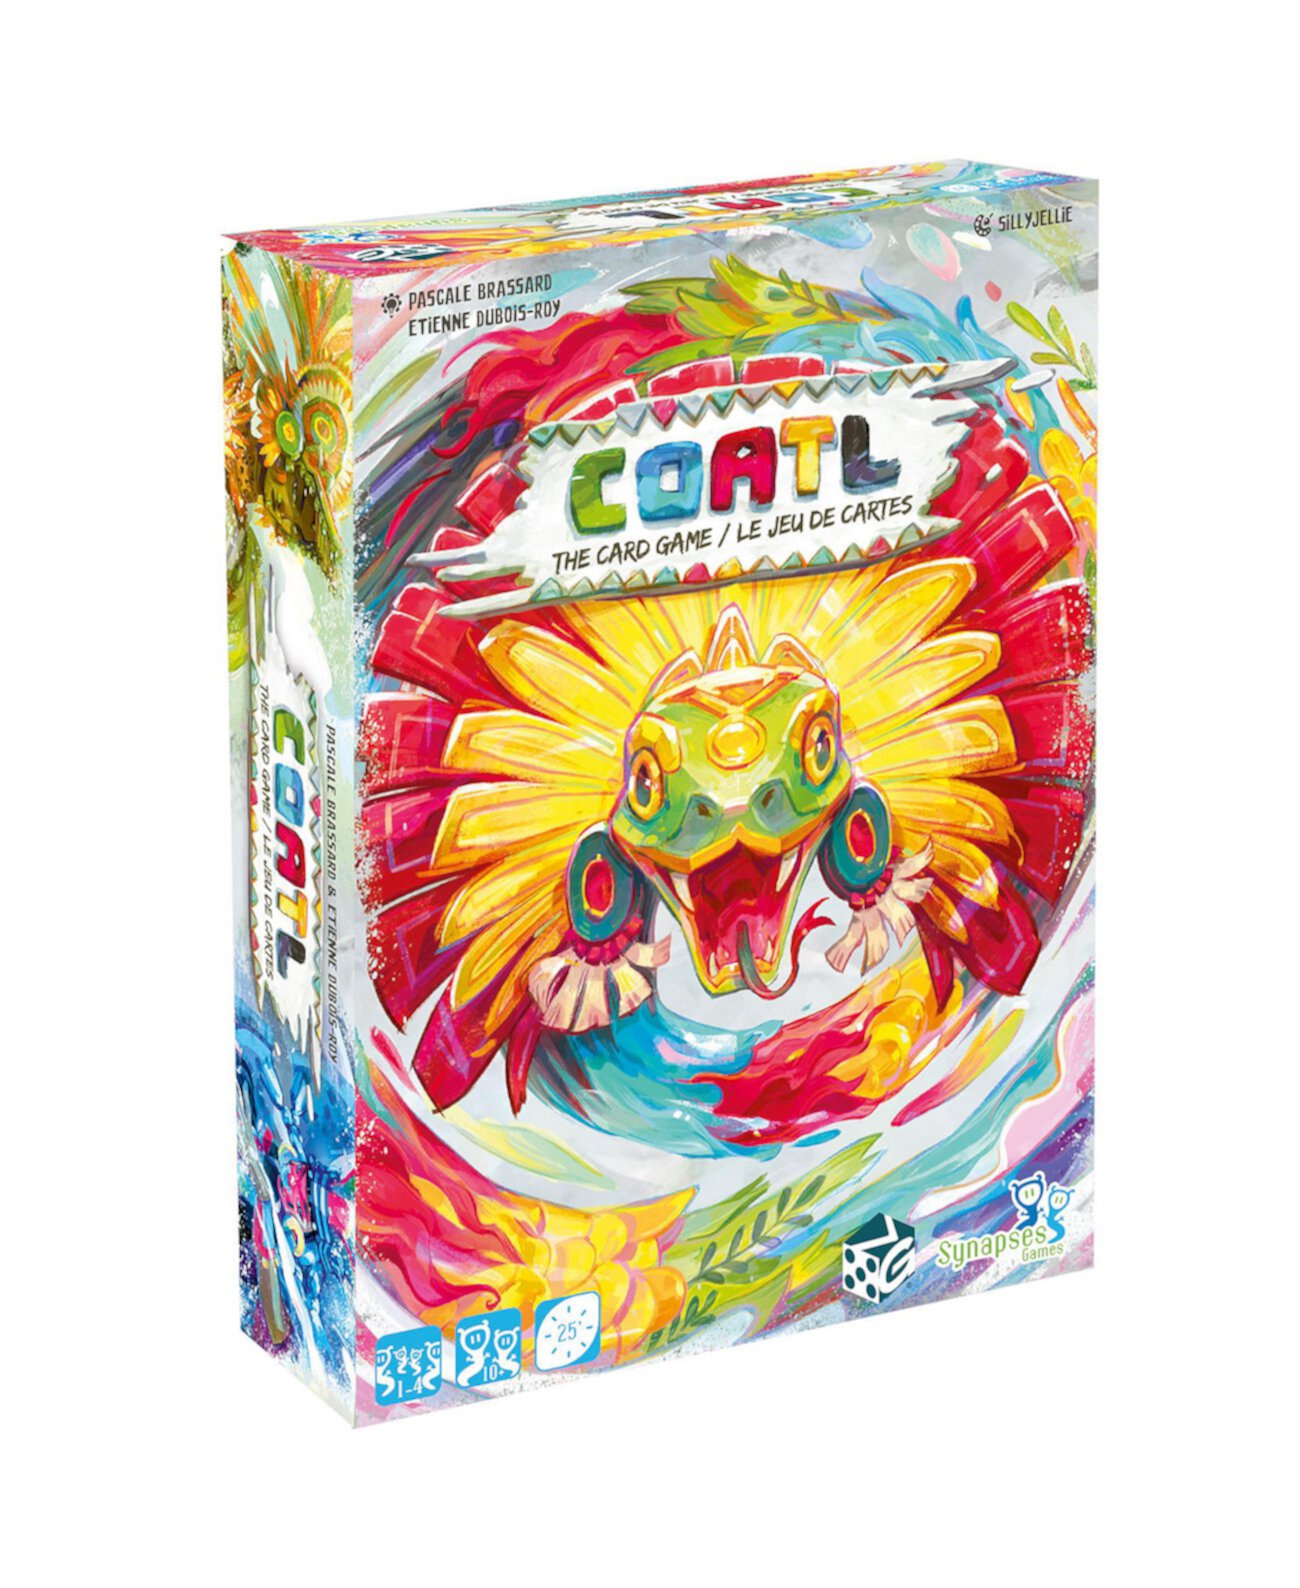 COATL The Card Game Стратегическая карточная игра Aztec Synapses Games